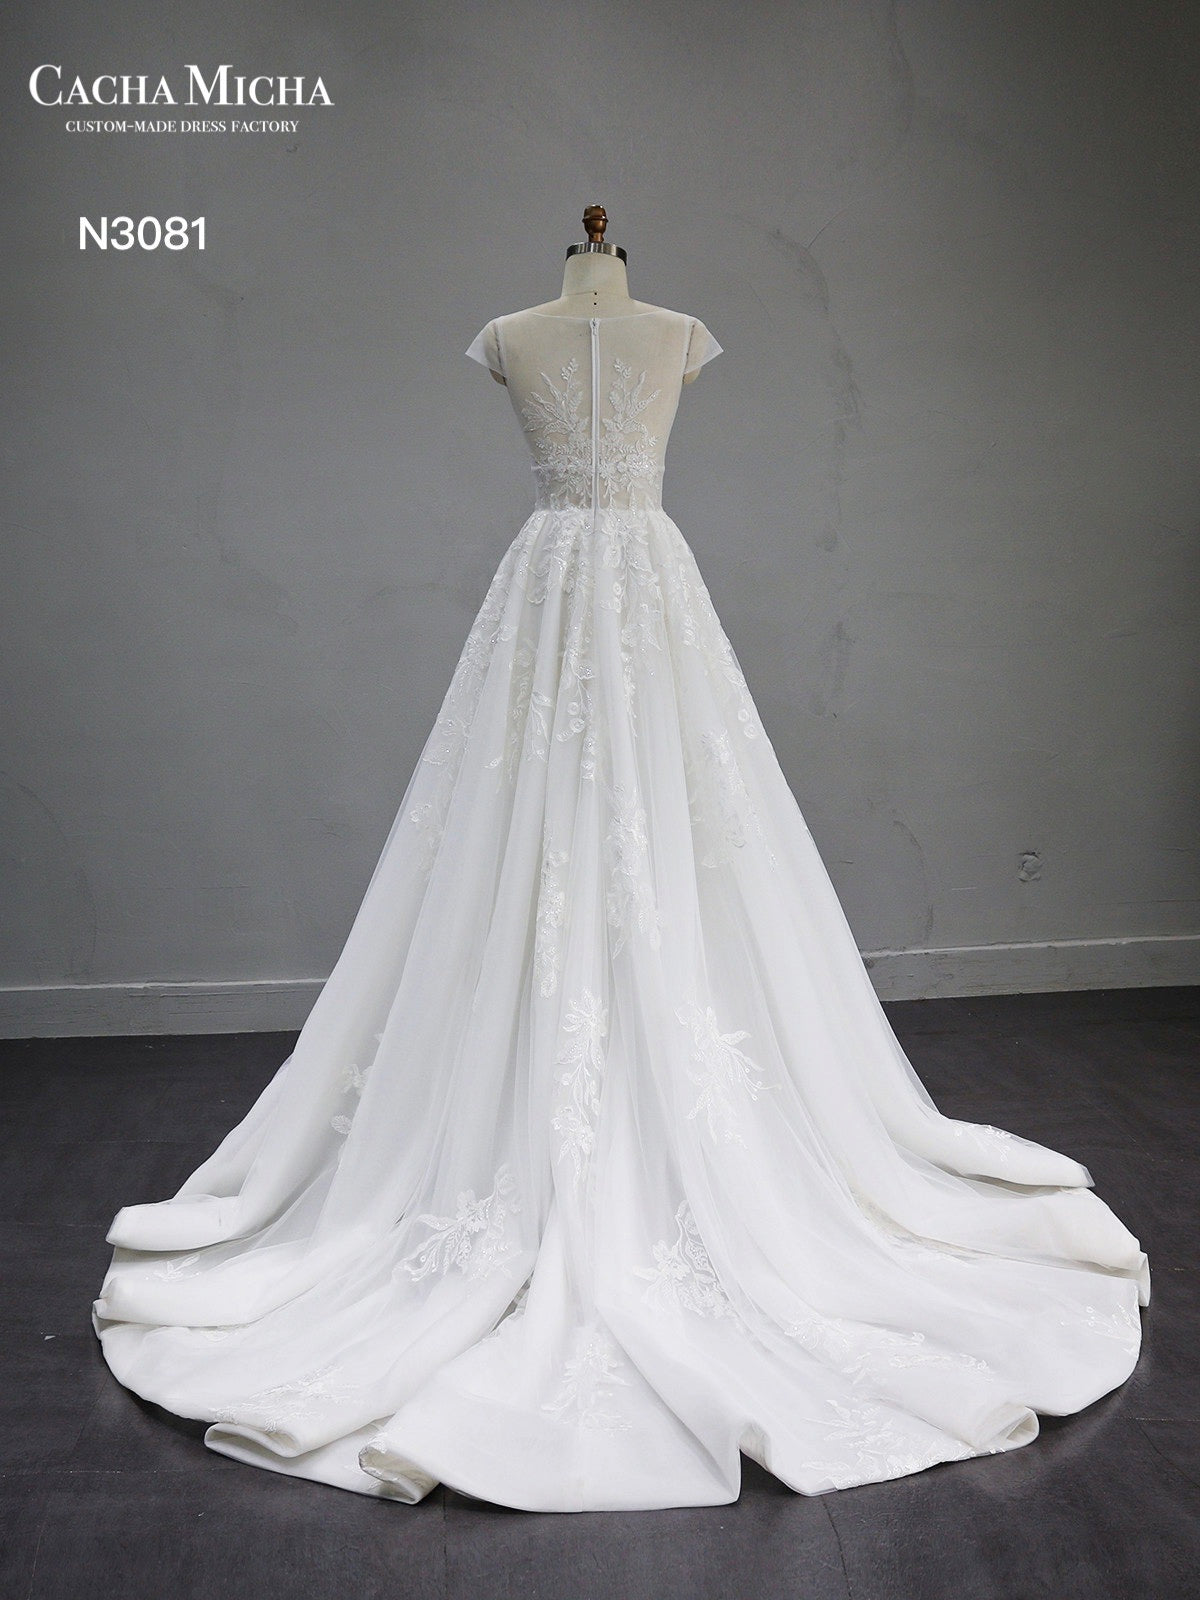 Cap Sleeves Side Slit Lace A Line Wedding Dress N3081